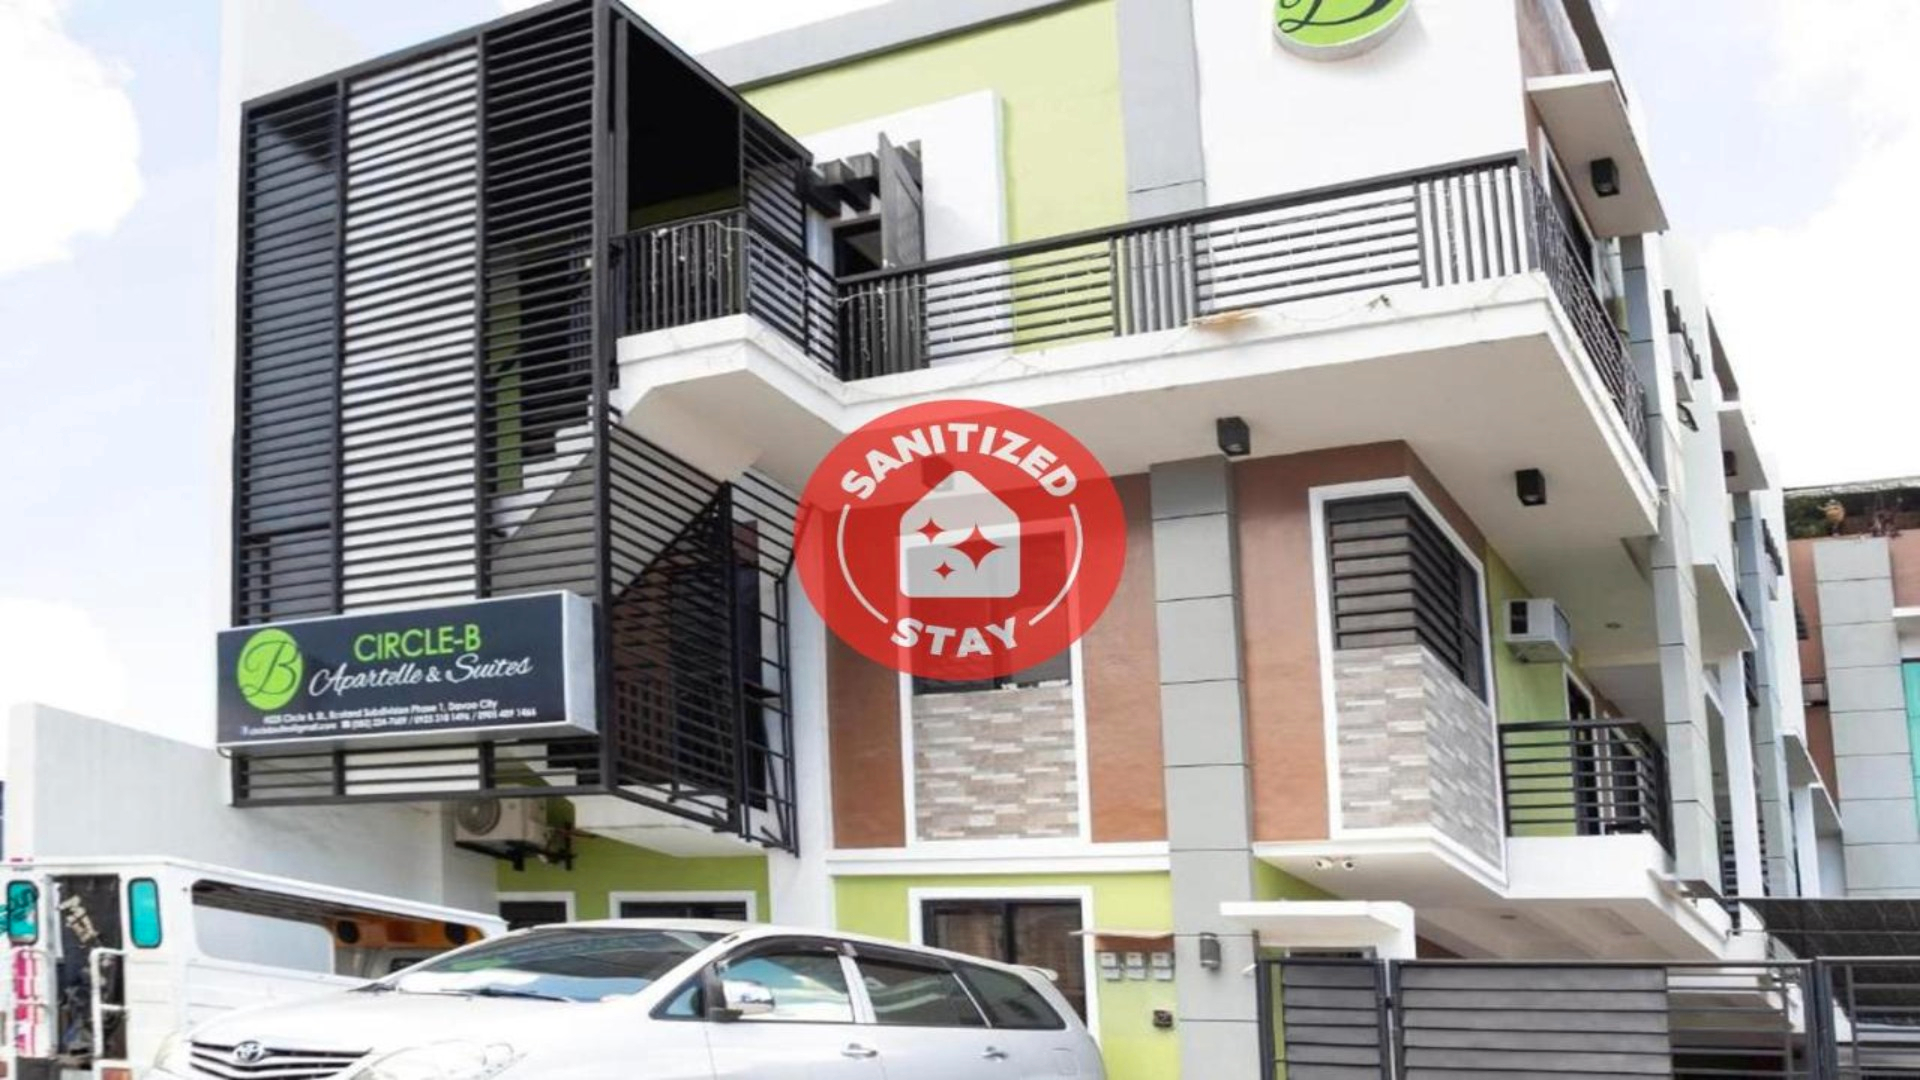 Exterior & Views, OYO 165 Circle-b Apartelle & Suites, Davao City